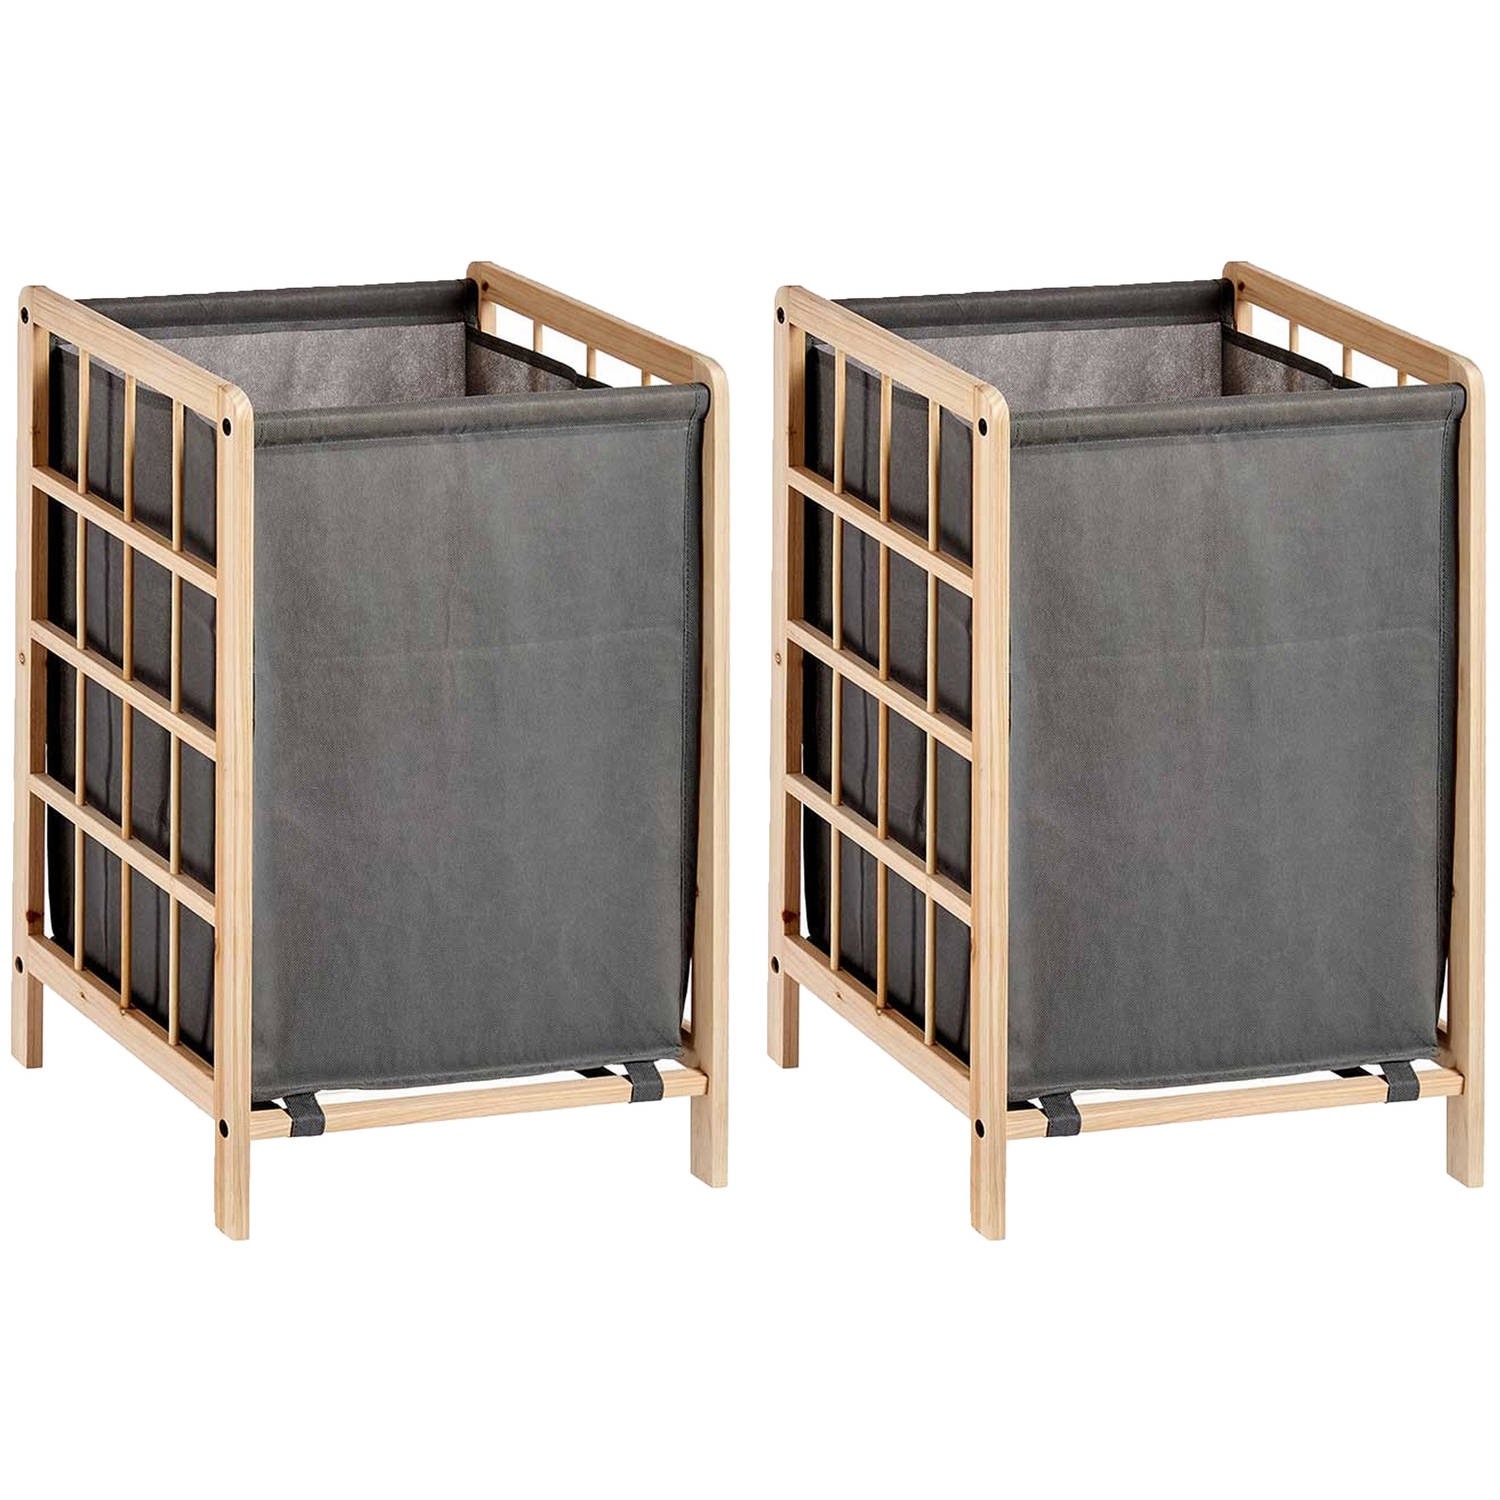 Kipit Wasmand Woodbox - 2x - met opvang waszak - 50 liter compartiment - 40 x 33 x 60 cm - Wasmanden